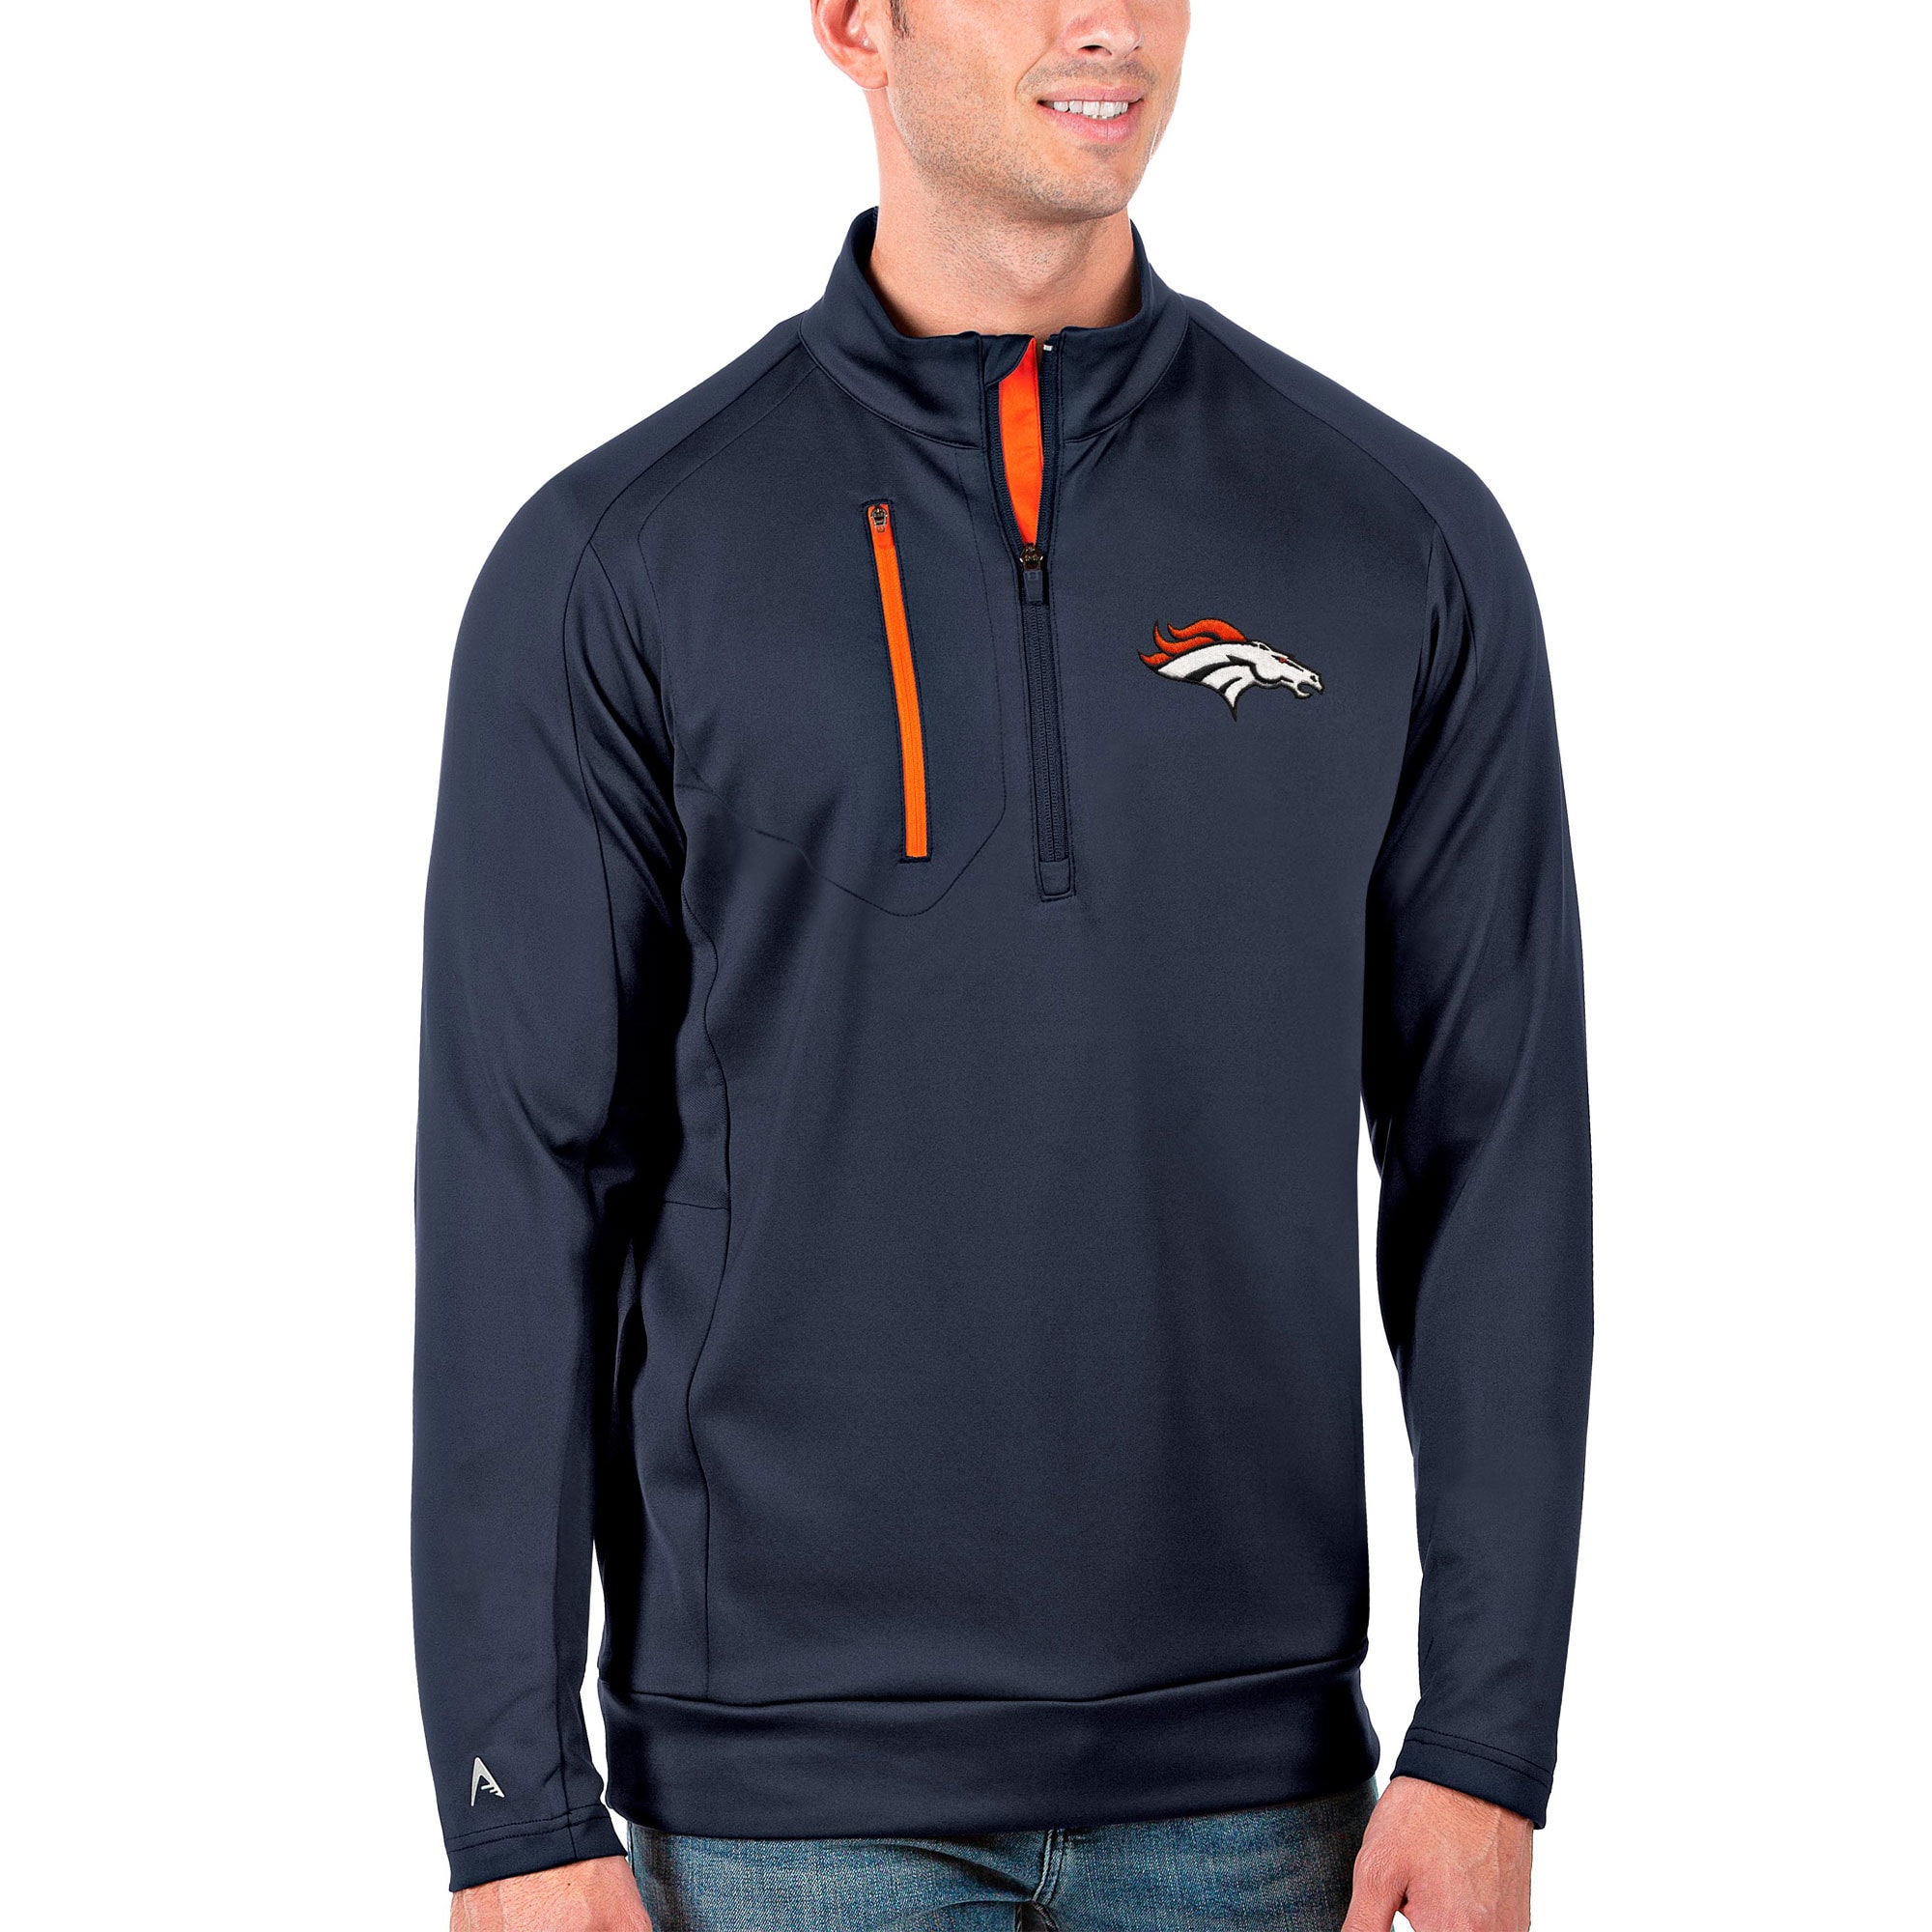 Men's Antigua Navy/Orange Denver Broncos Generation Quarter-Zip Pullover Jacket - image 1 of 1